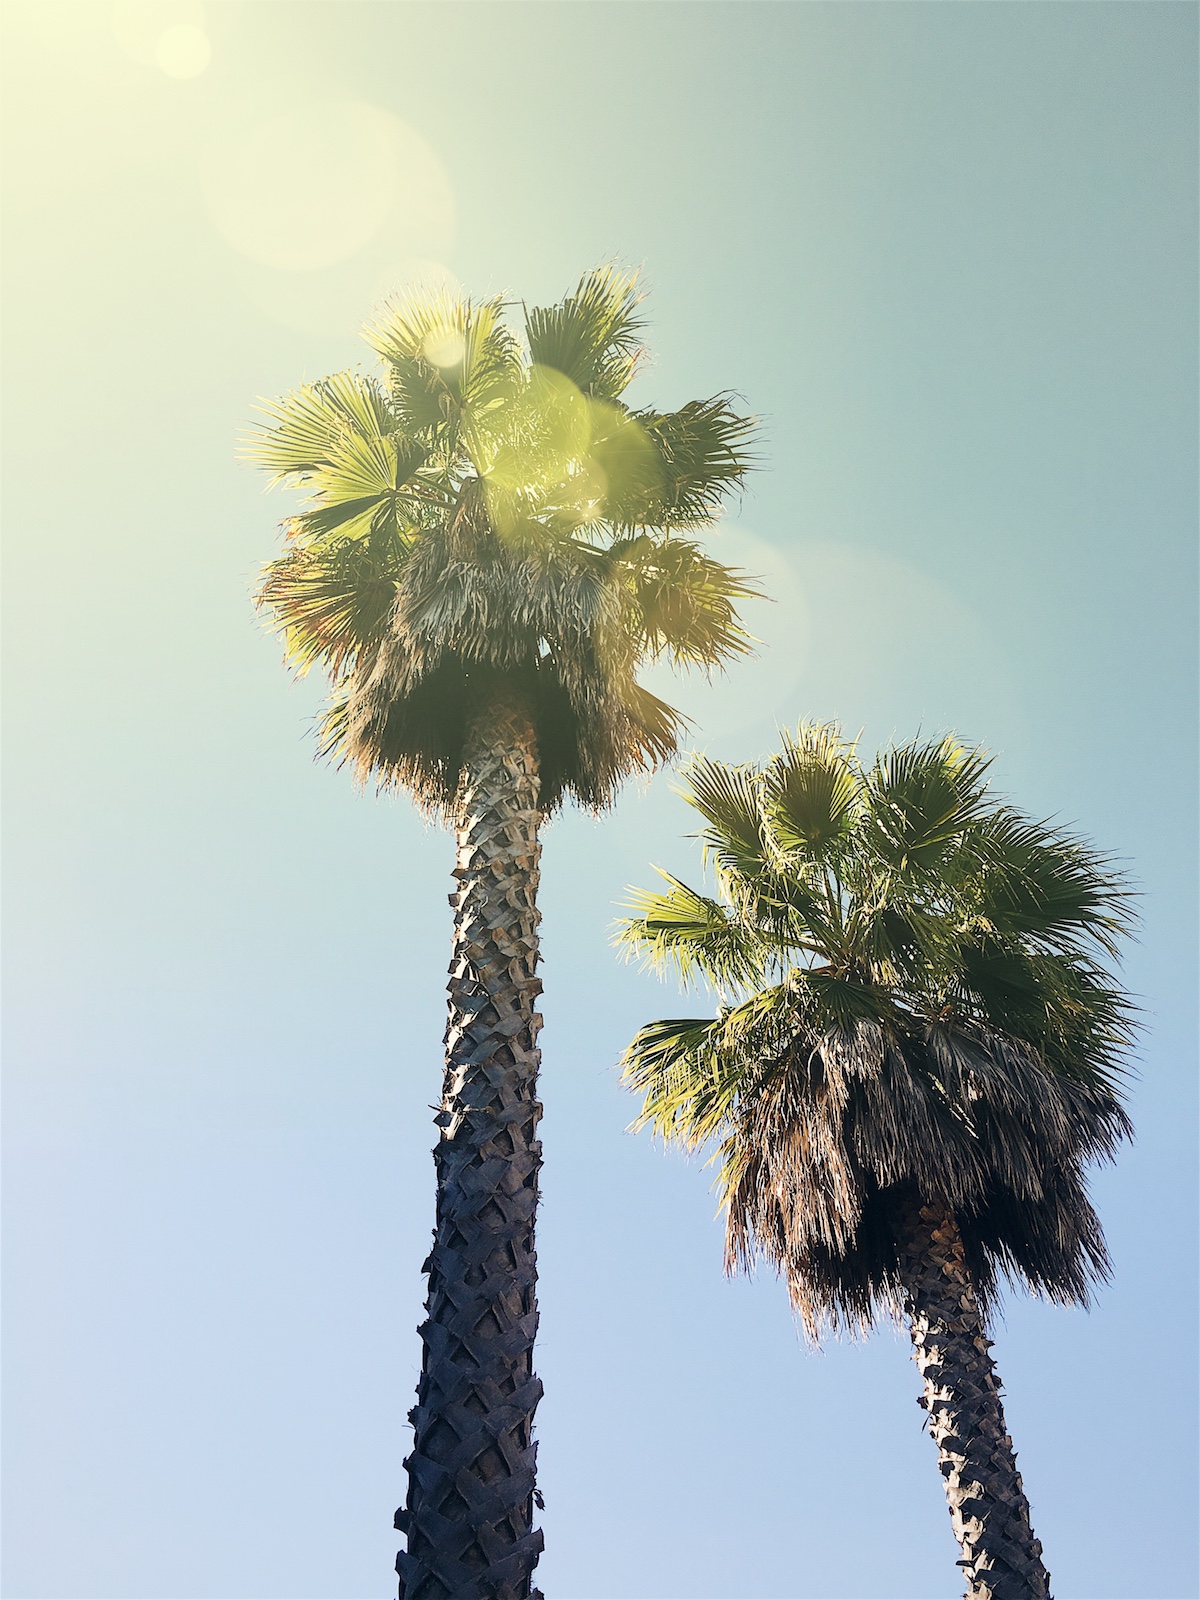 Palm Trees with Sunburst